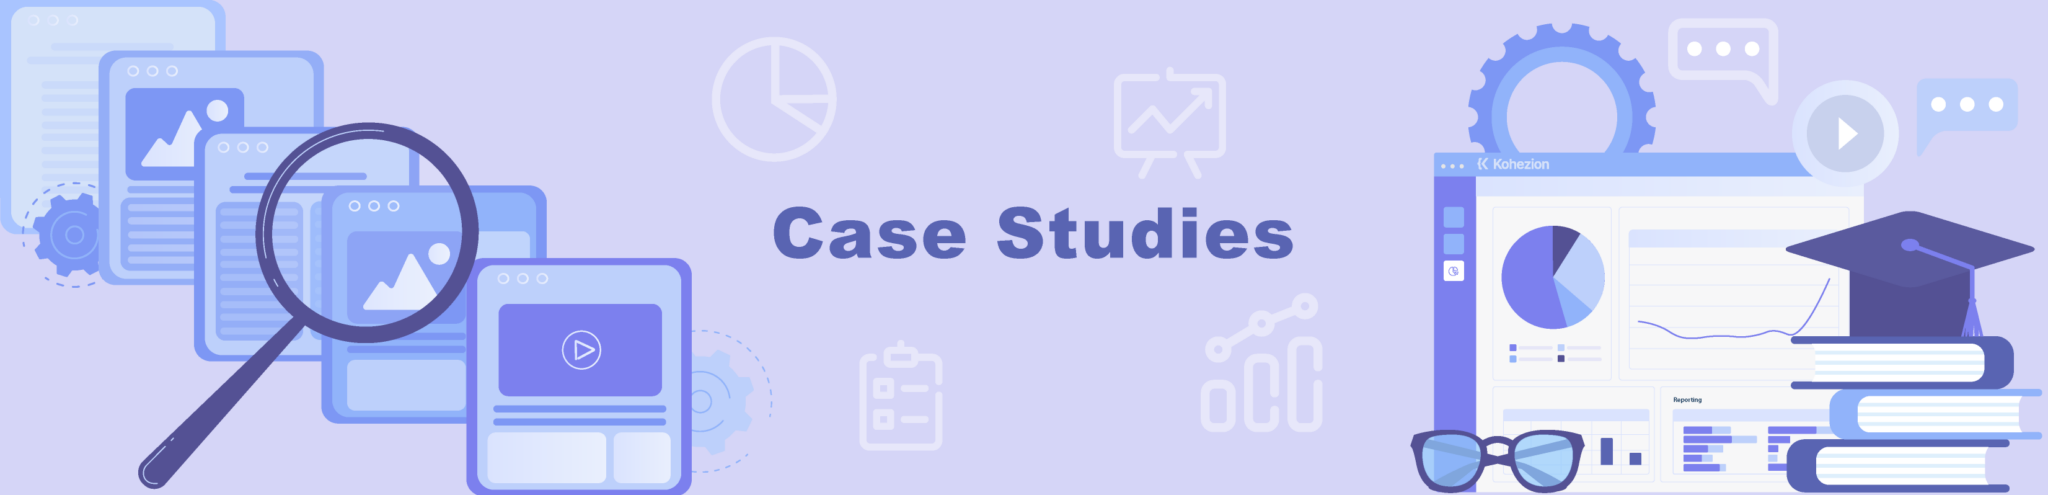 Case-studies-banner